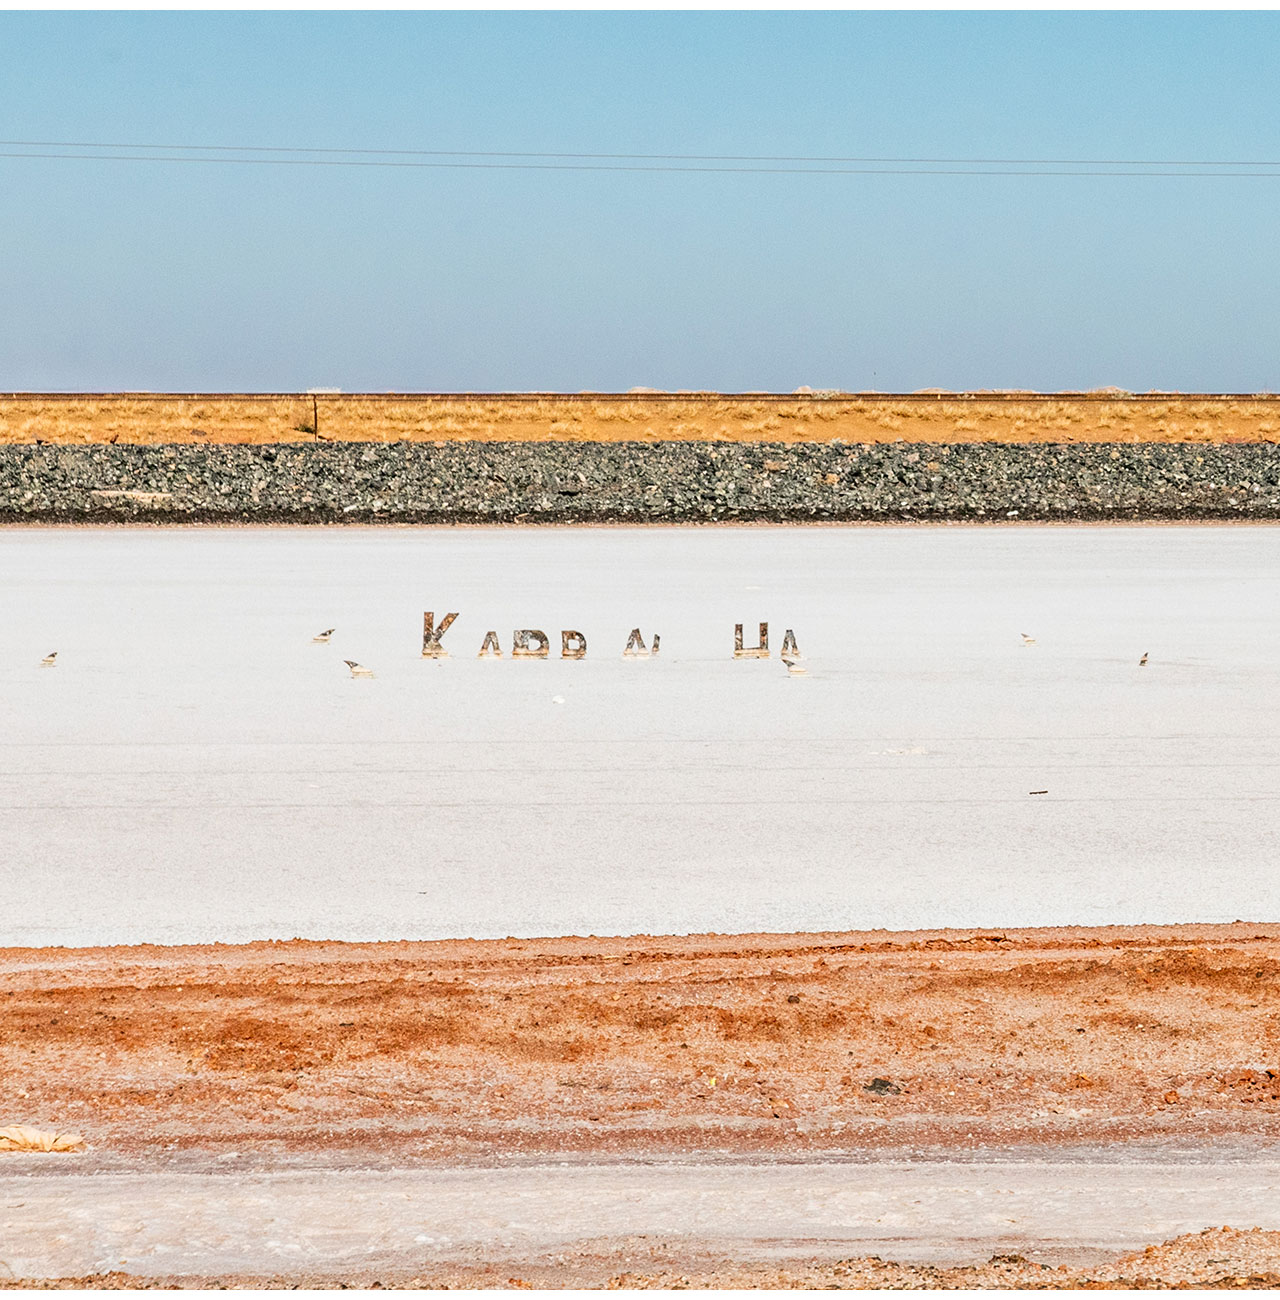 Horizontal lines of the railway track and salt flats near Karratha in the Pilbara region of Western Australia